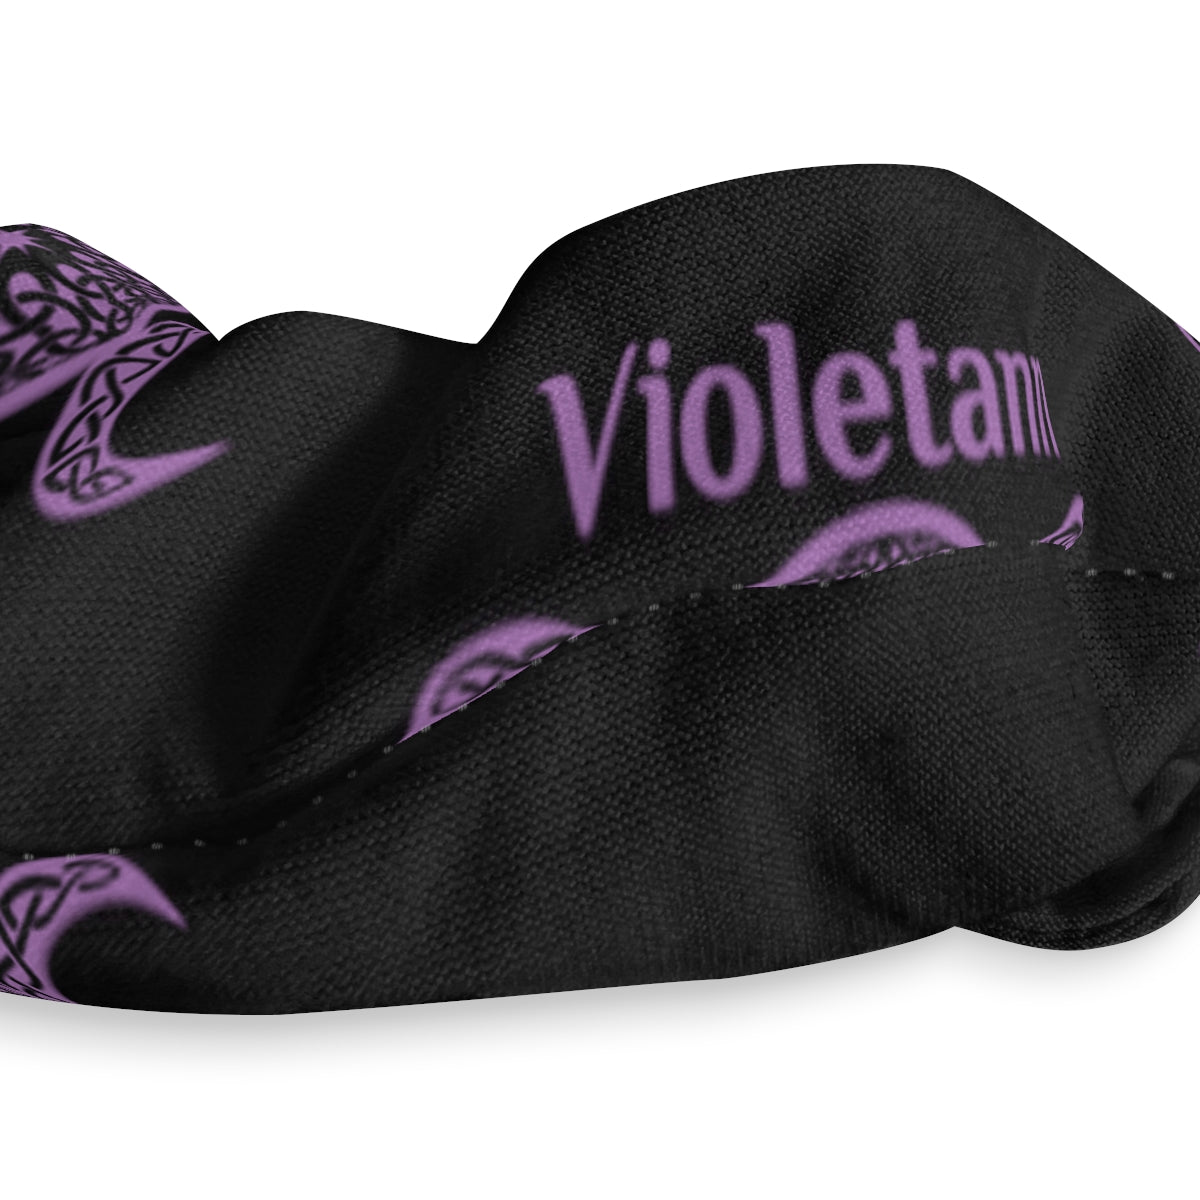 Violetann Tarot Logo Scrunchie